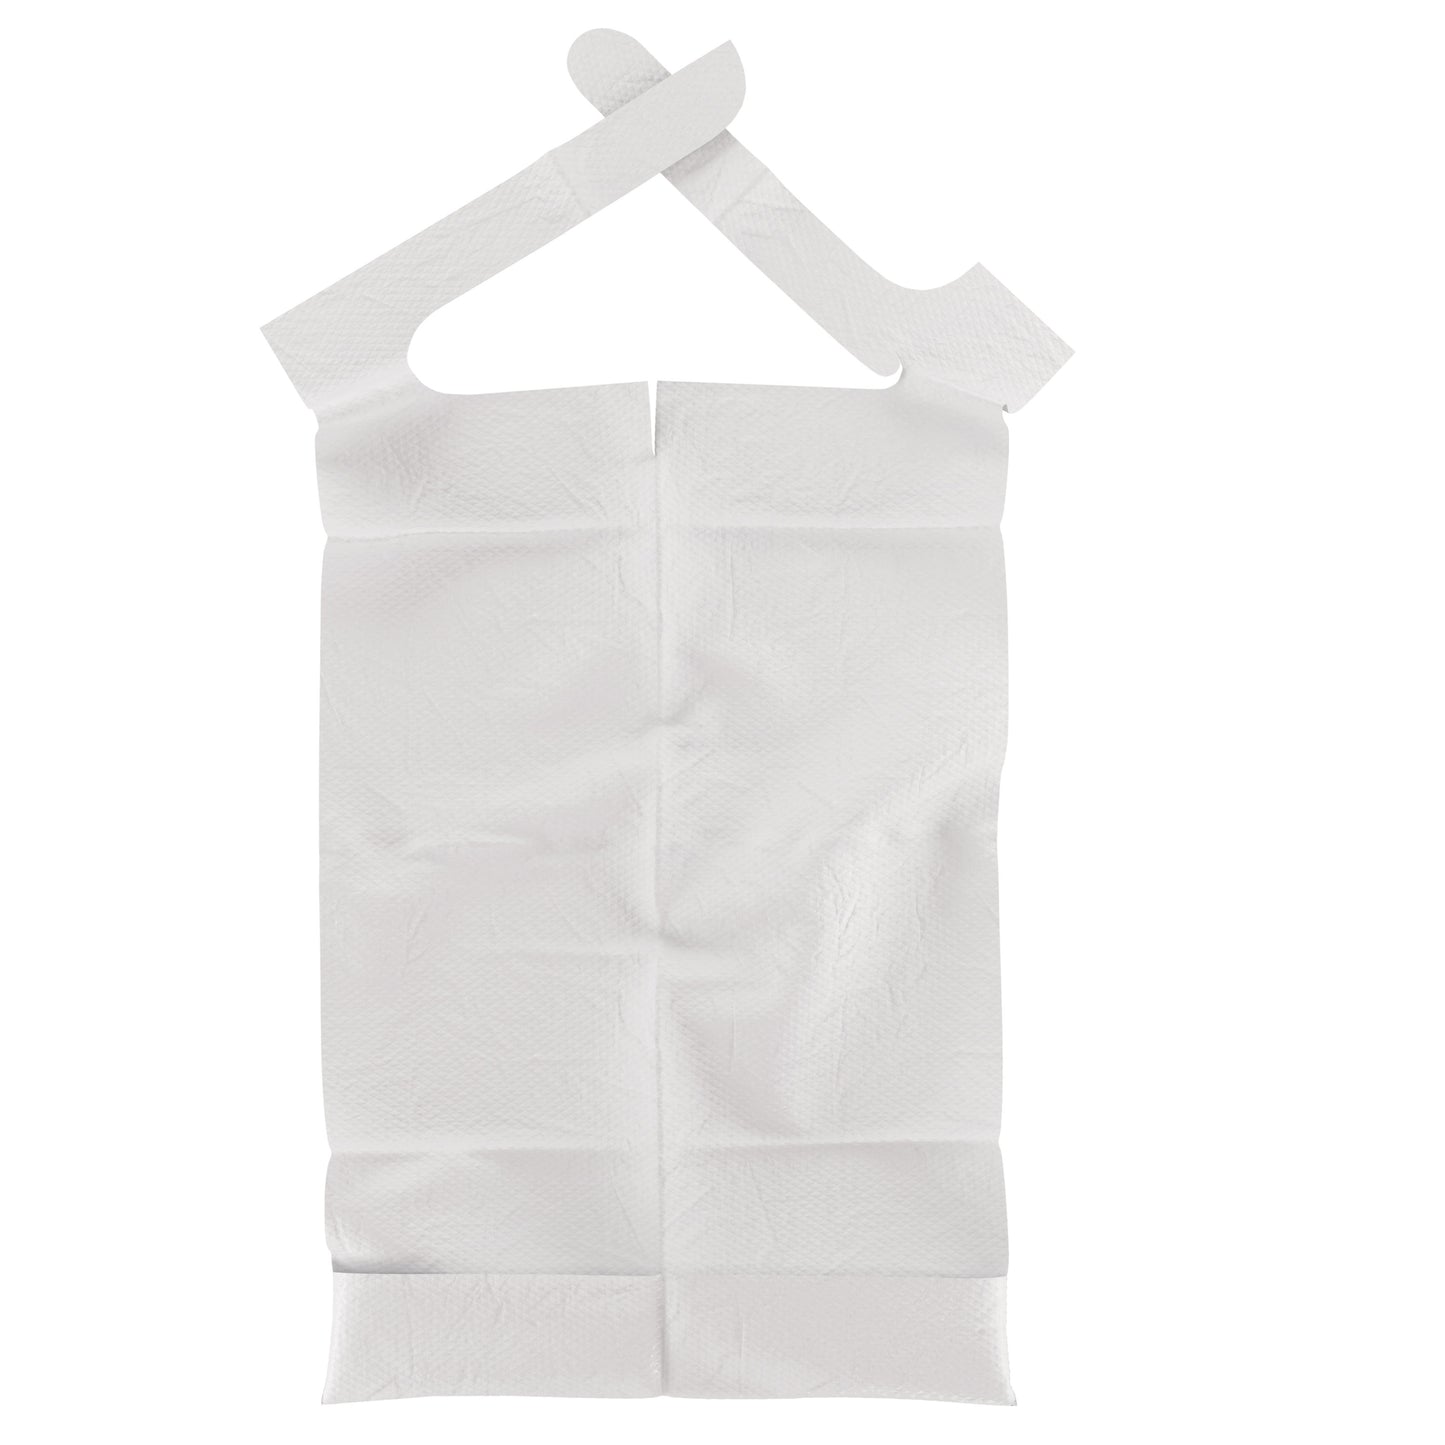 Sensalou disposable dining apron for adults - 100 pieces